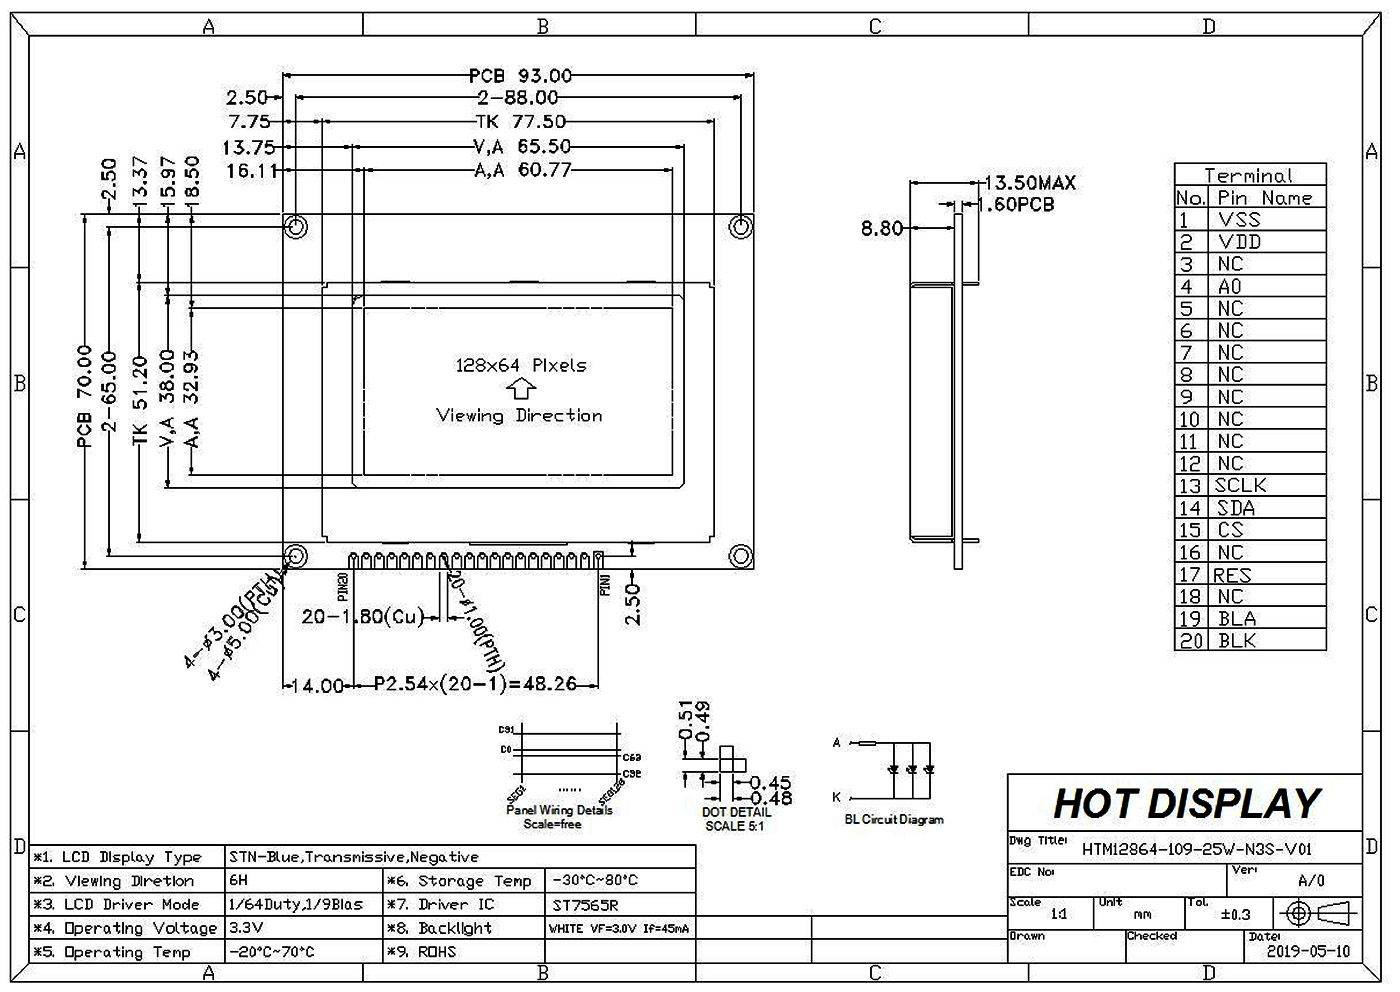 HTM12864-109-25W-N3S-V01 Manual_04.jpg